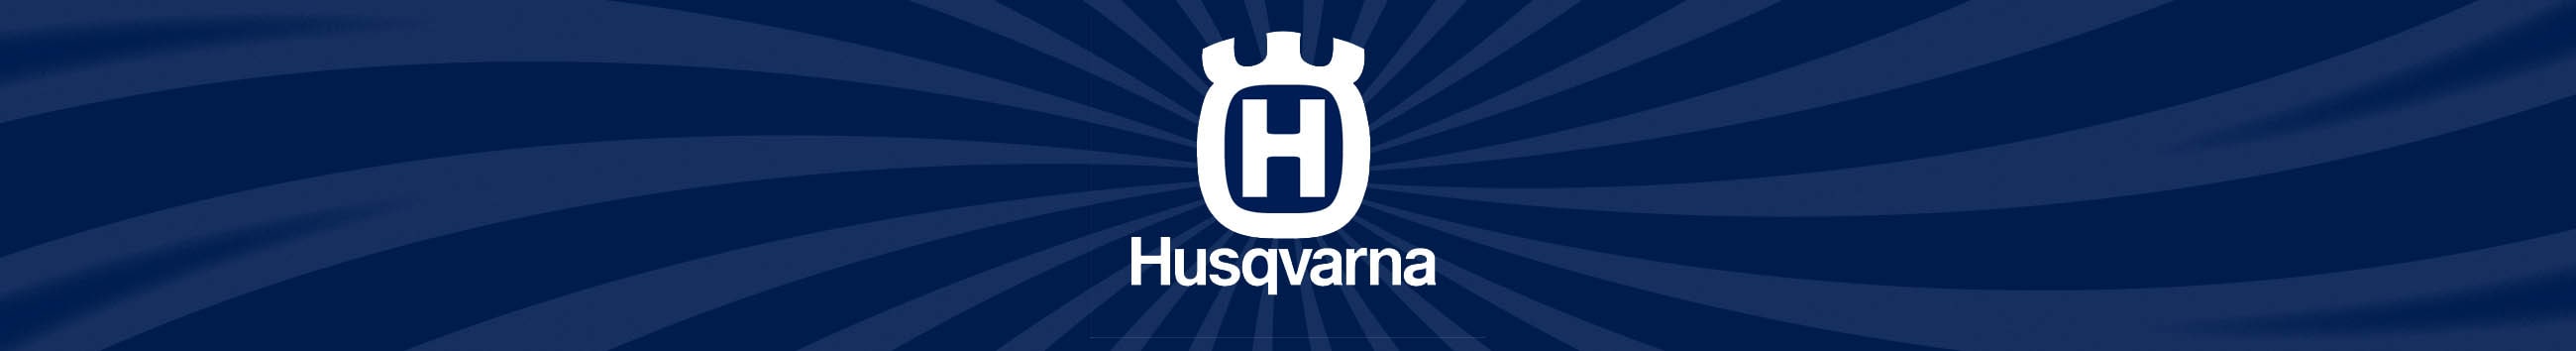 Husqvarna vendor page banner